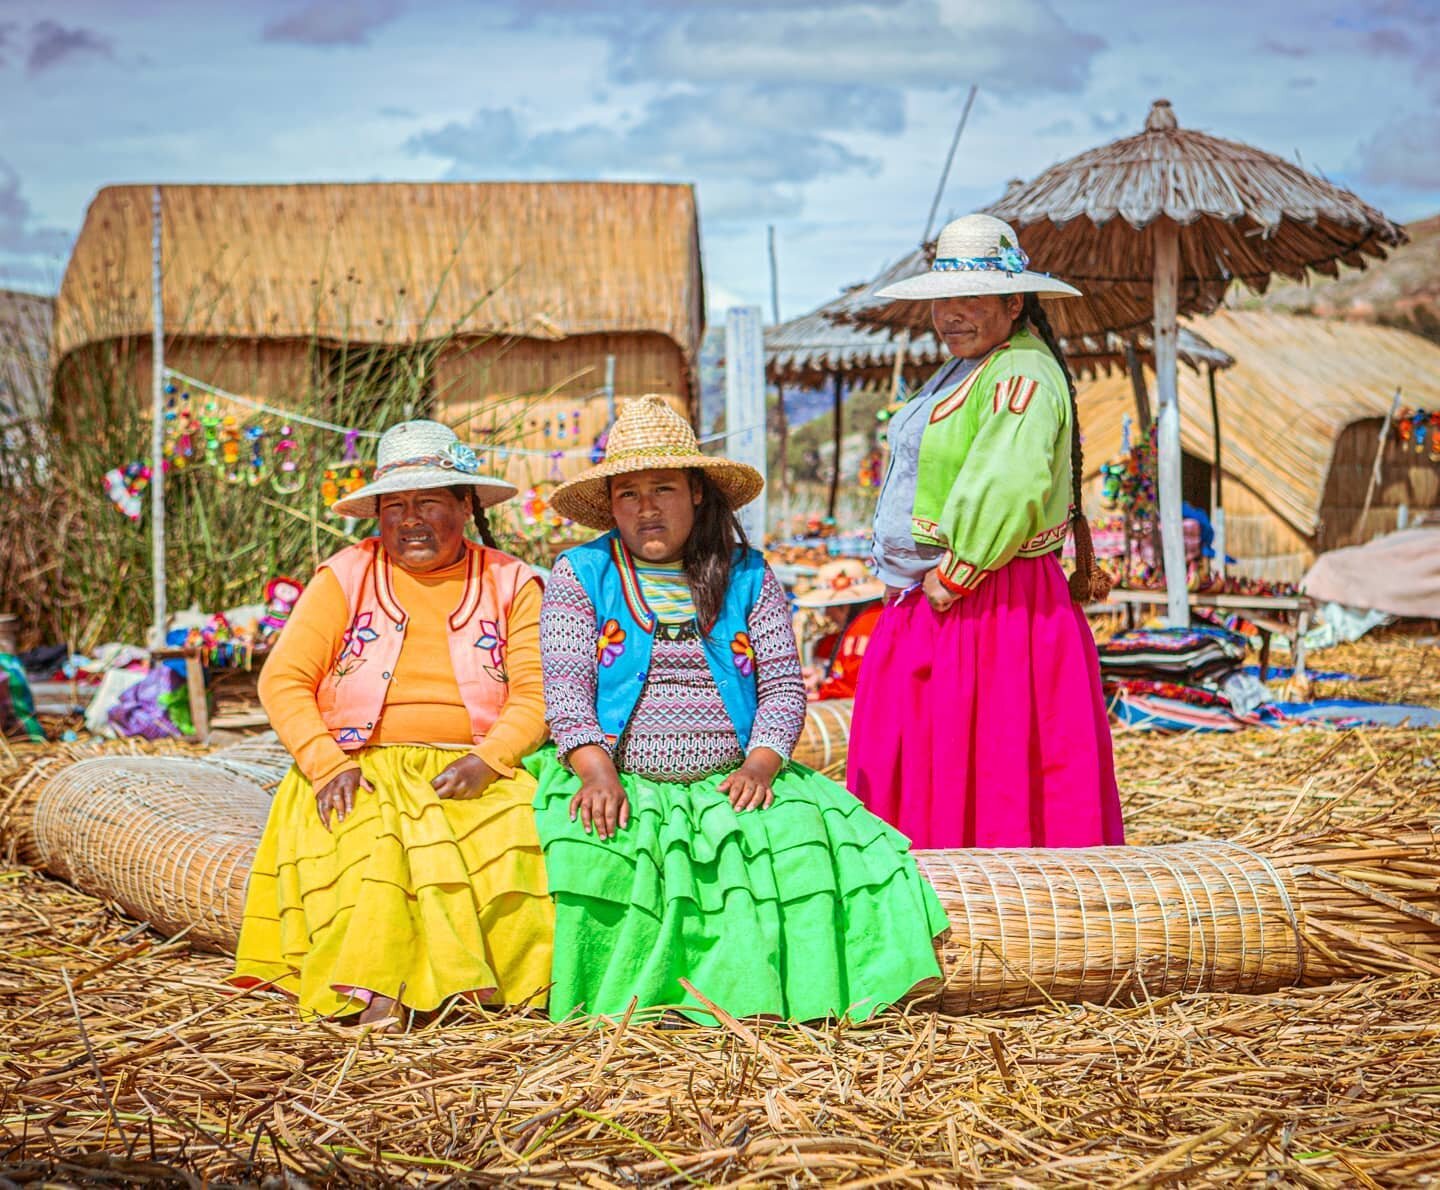 The Uros people of Lake Titicaca. .
.
.
.
.
.
.
.
.
.
.
.
.
.
.
.
#natgeo  #natgeoyourshot  #travelperu  #travelperu  #traveltheworld #wanderlust #travelsouthamerica #visitperu  #peruvianadventures  #peruvian  #lonelyplanetperu #lonelyplanet #globetr